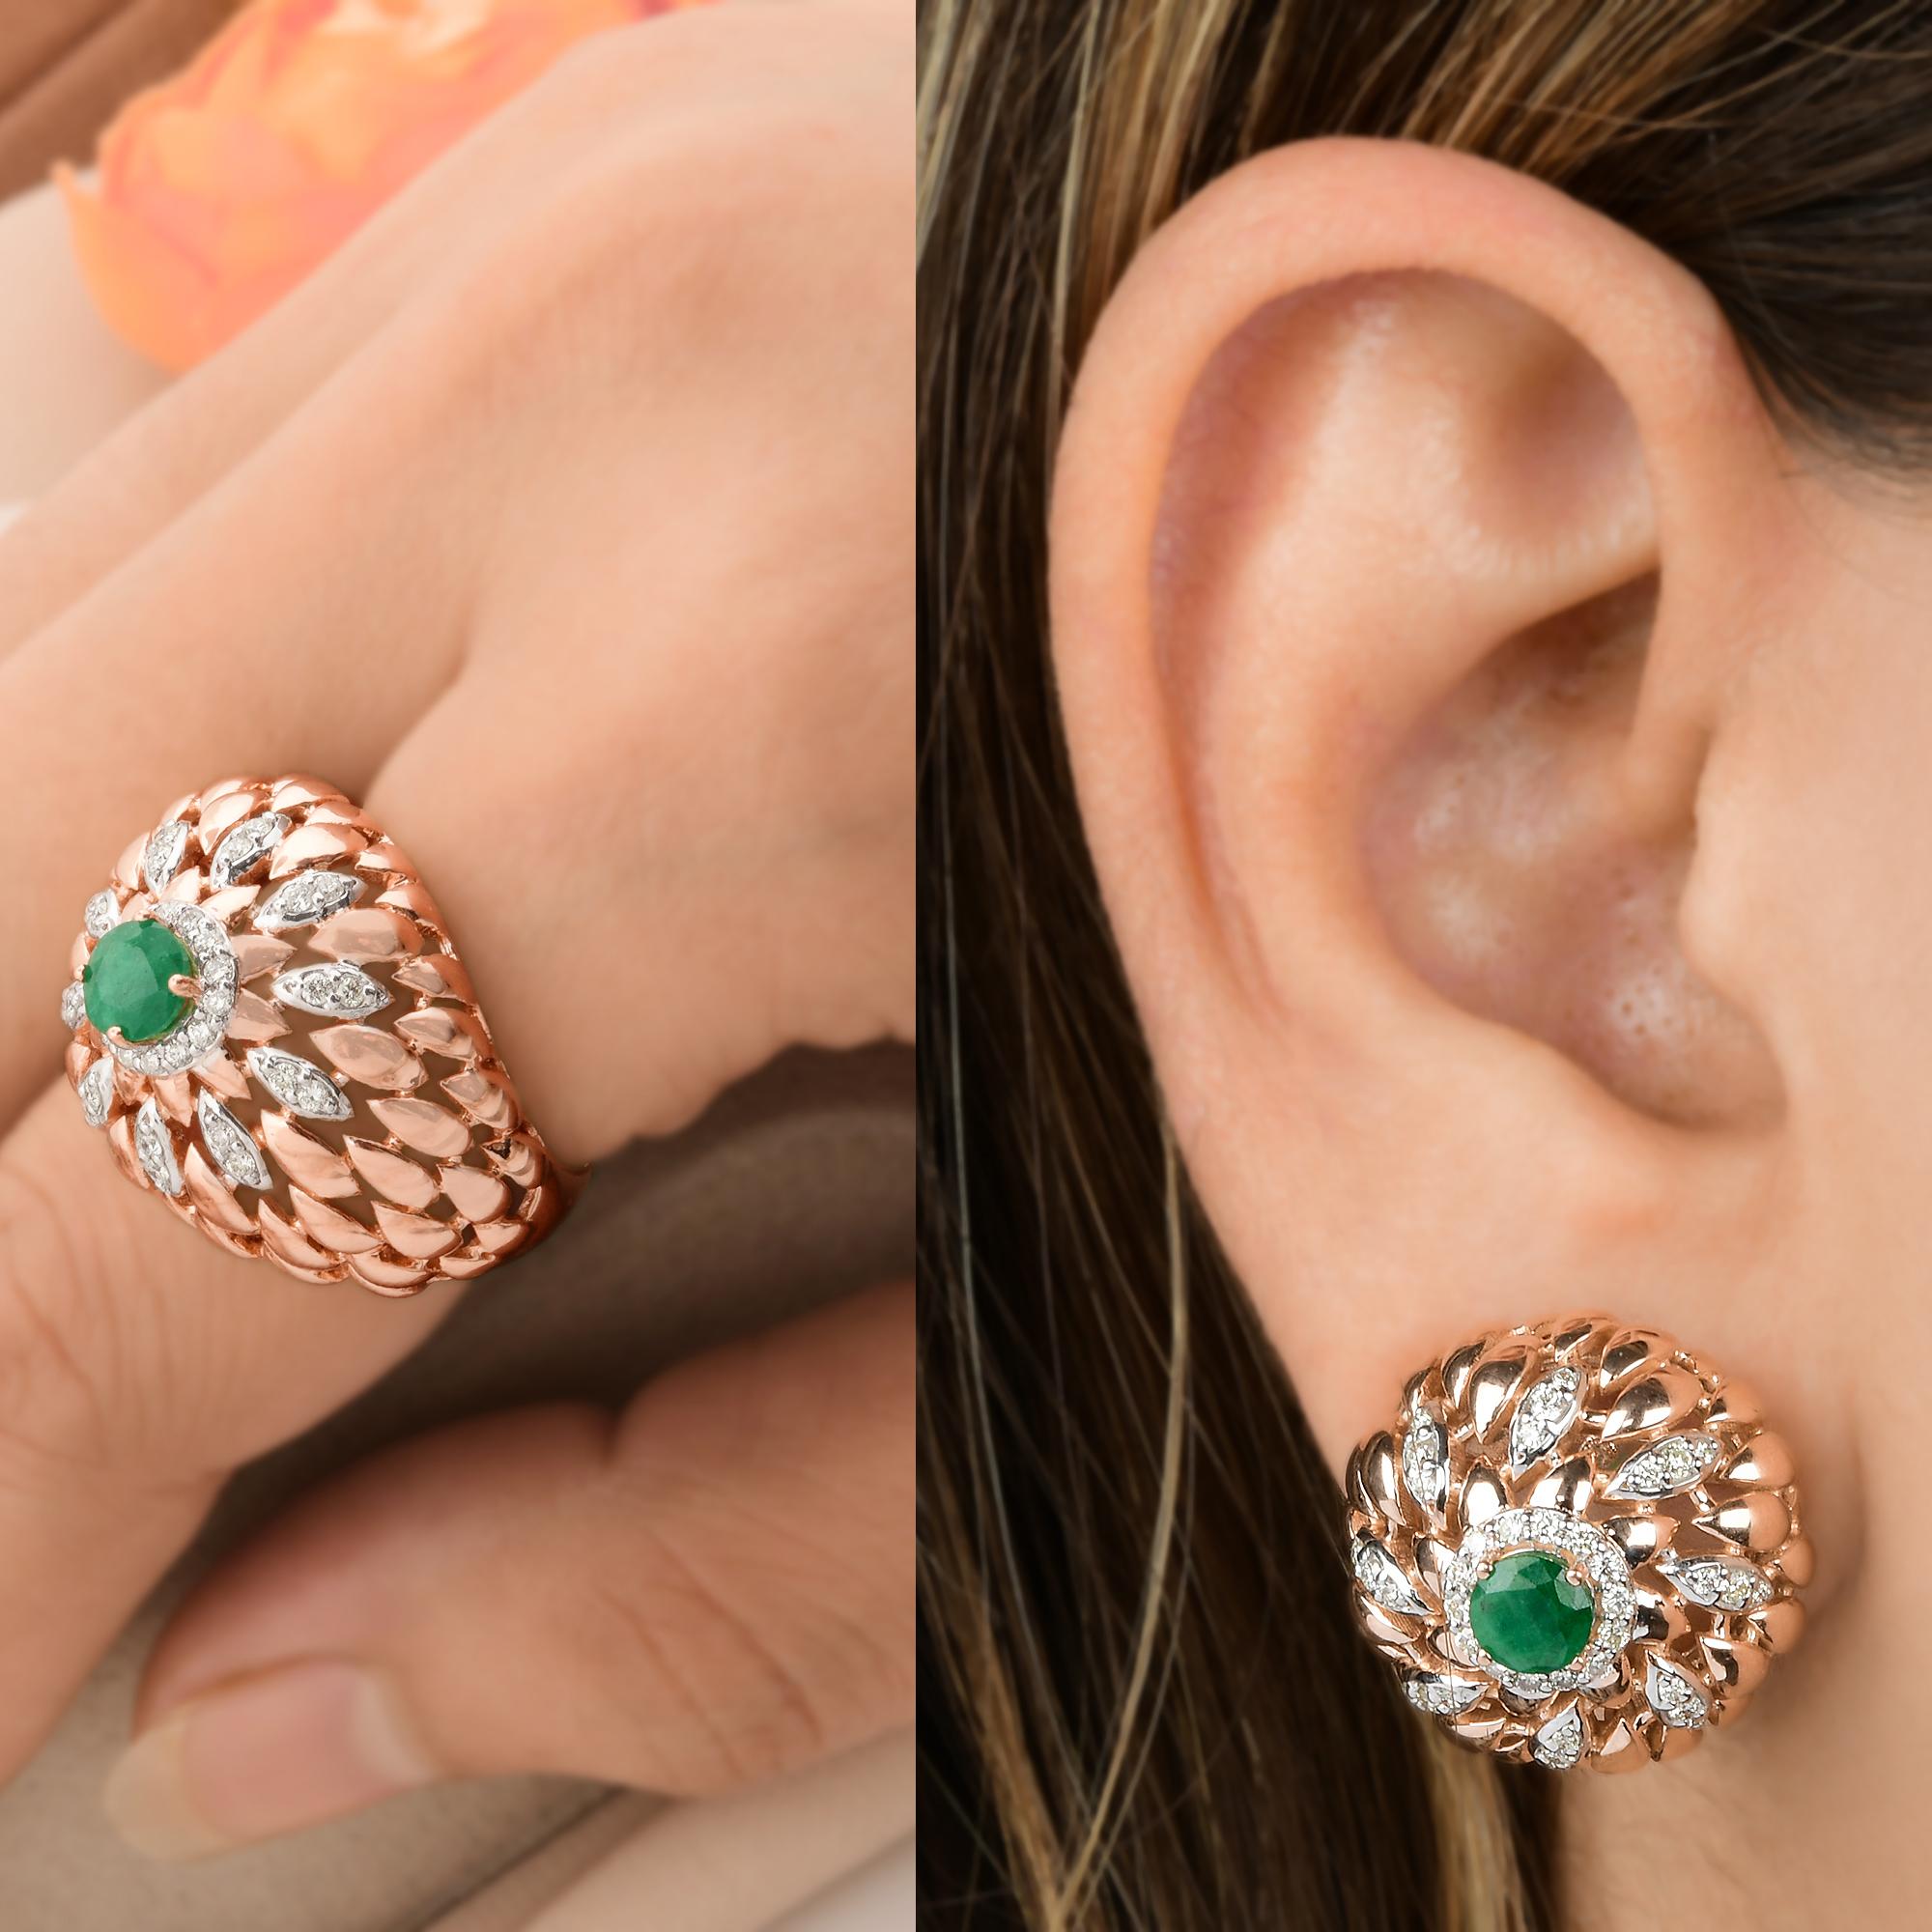 Taille ronde Zambian Emerald Gemstone Dome Ring Diamond Pave Solid 14k Rose Gold Fine Jewelry (bague en forme de dôme en émeraude zambienne, pavé de diamants, or rose massif) en vente